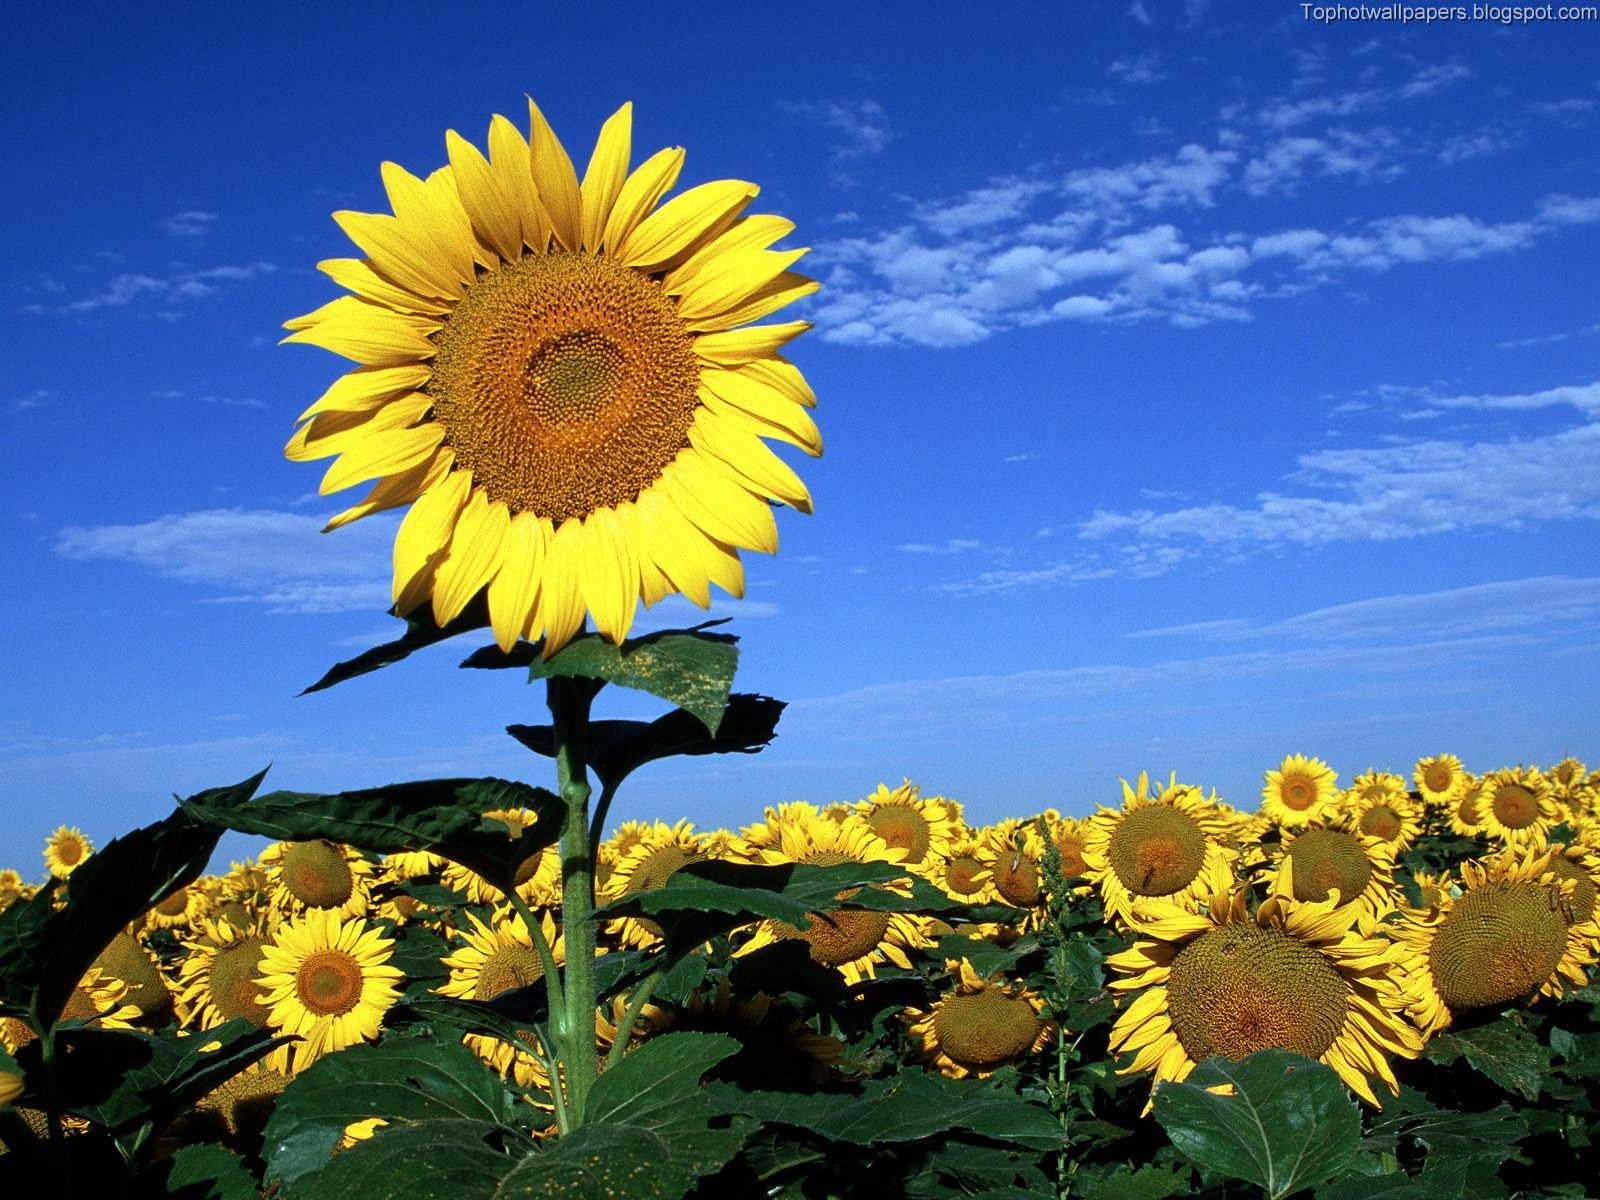 Big Sunflower In Sunflowers Field HD Wallpaper For Your Desktop